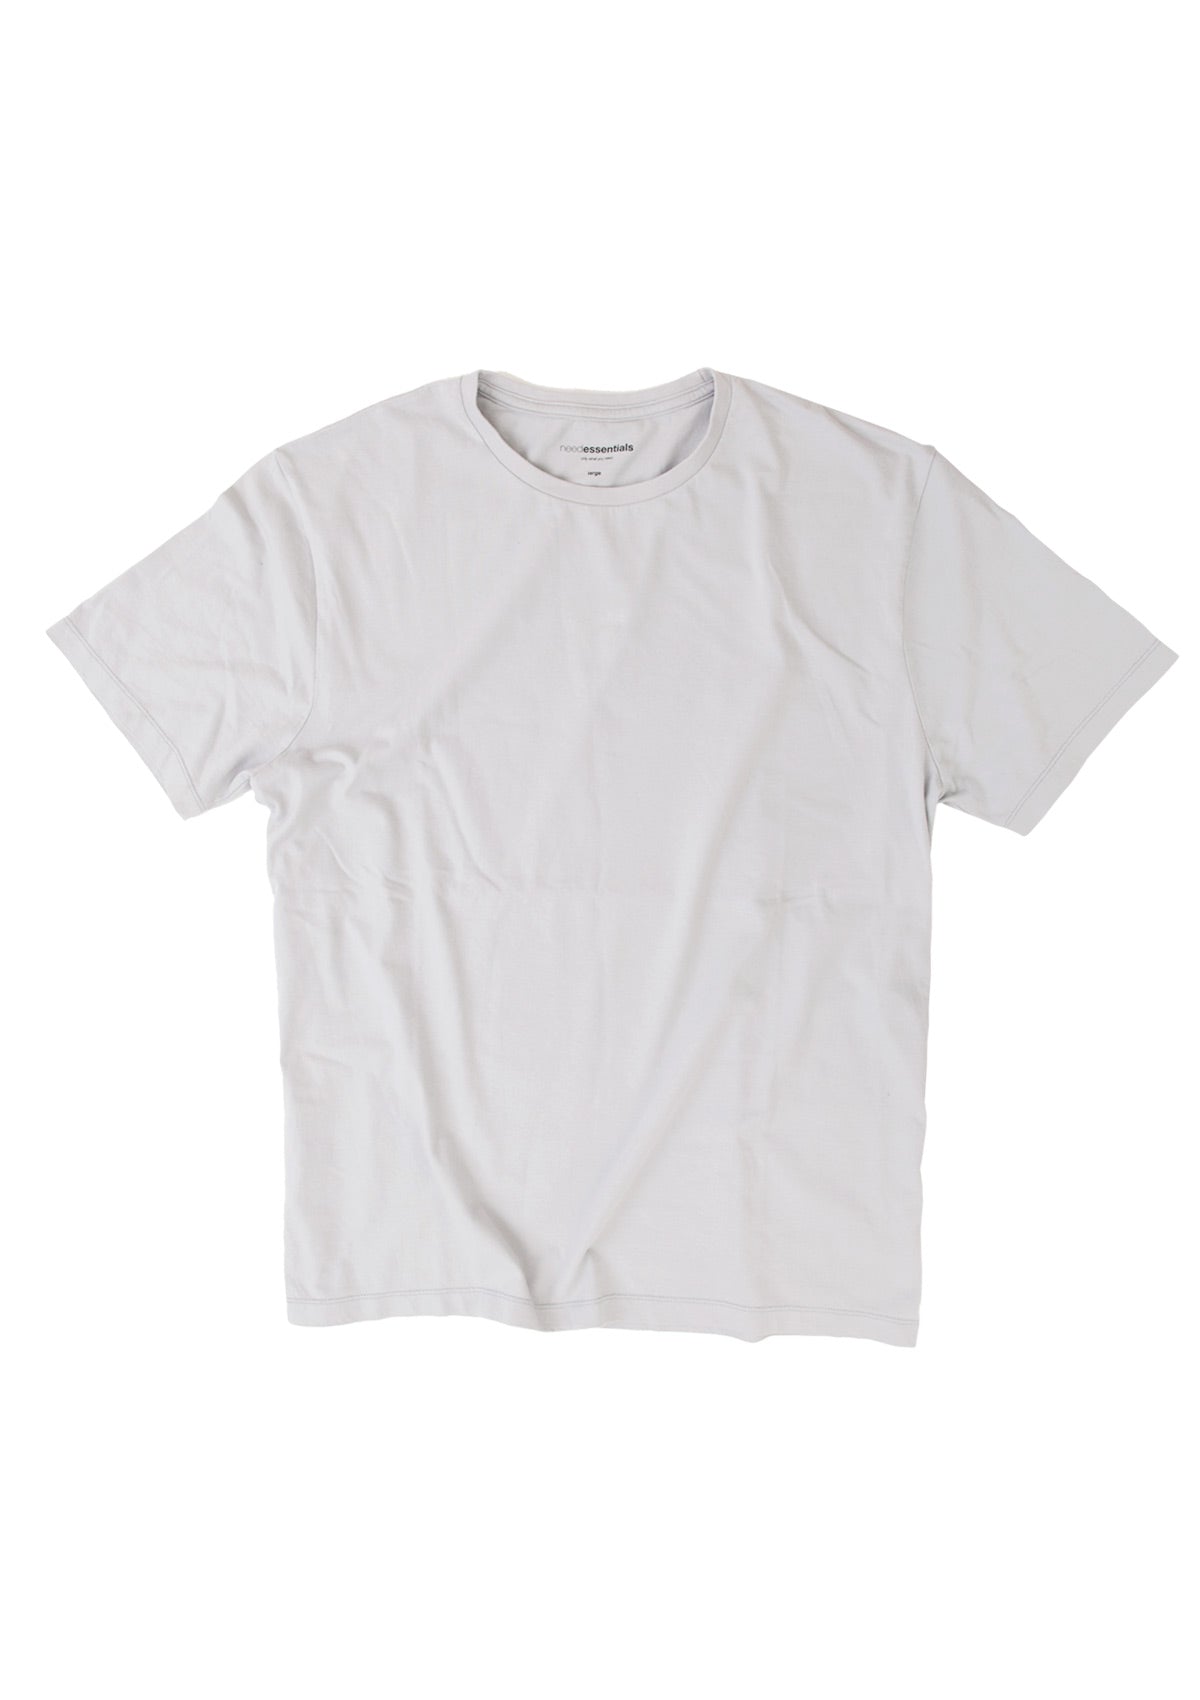 needessentials organic cotton plain t-shirt white